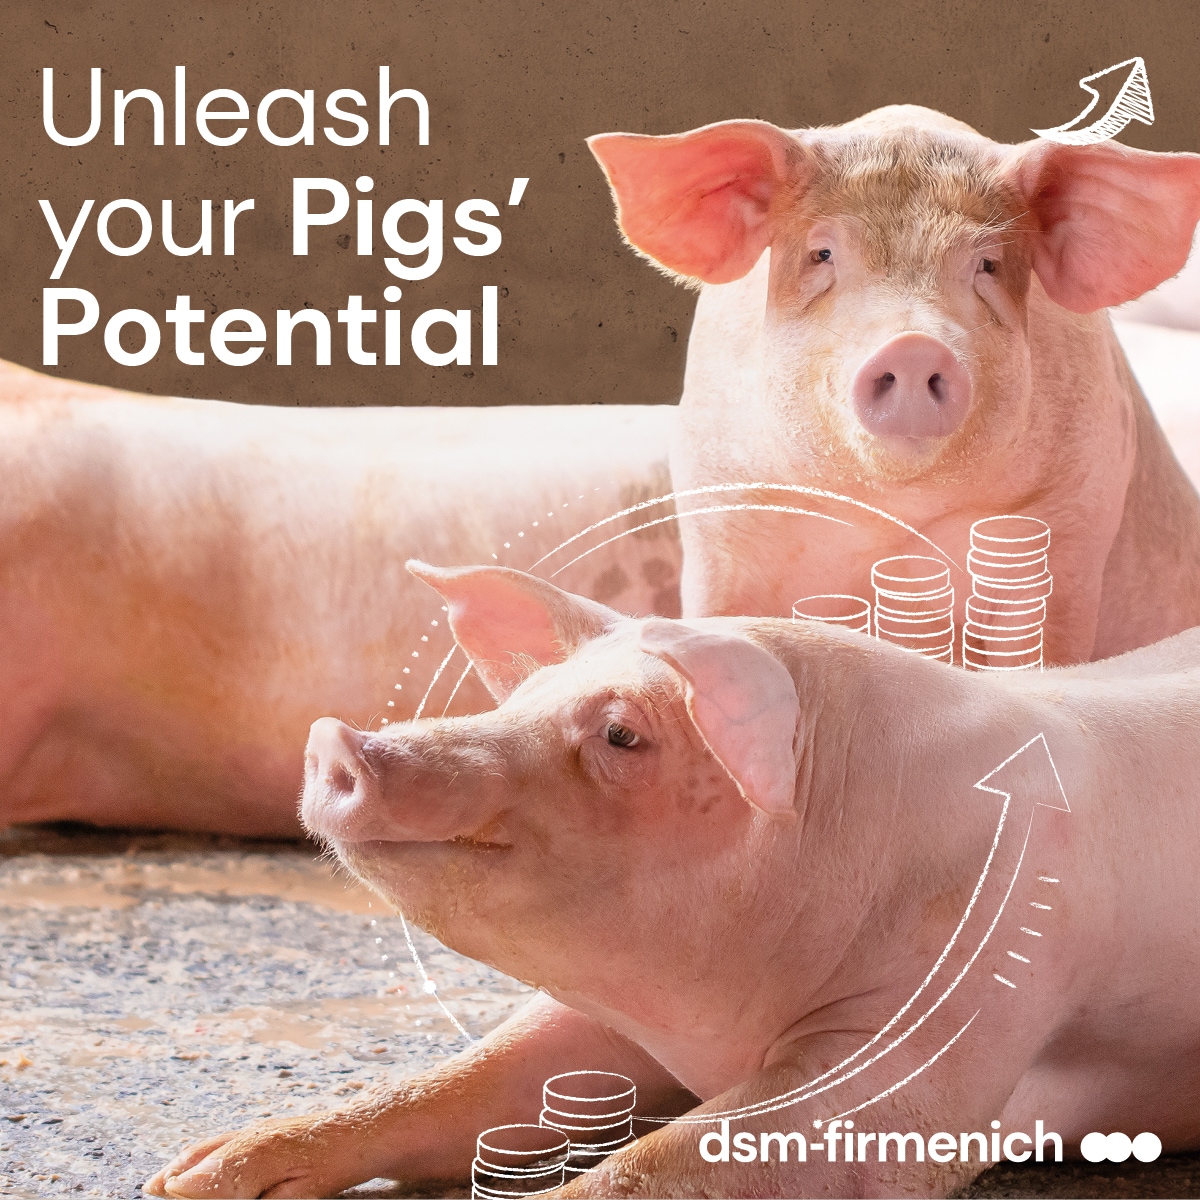 Unleash your pig's potential